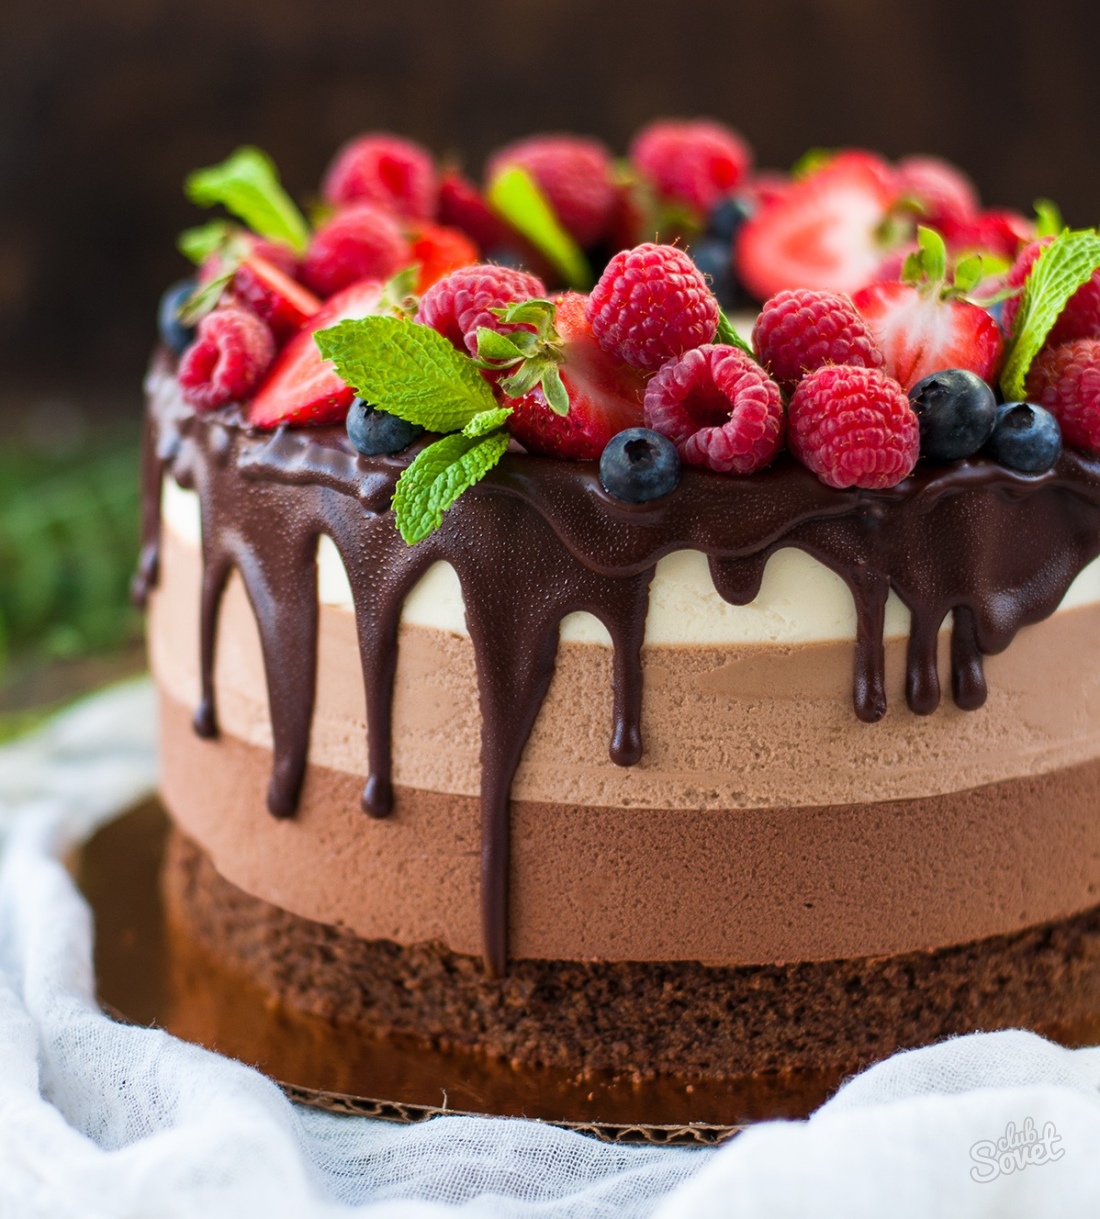 How to make leaks on chocolate cake?